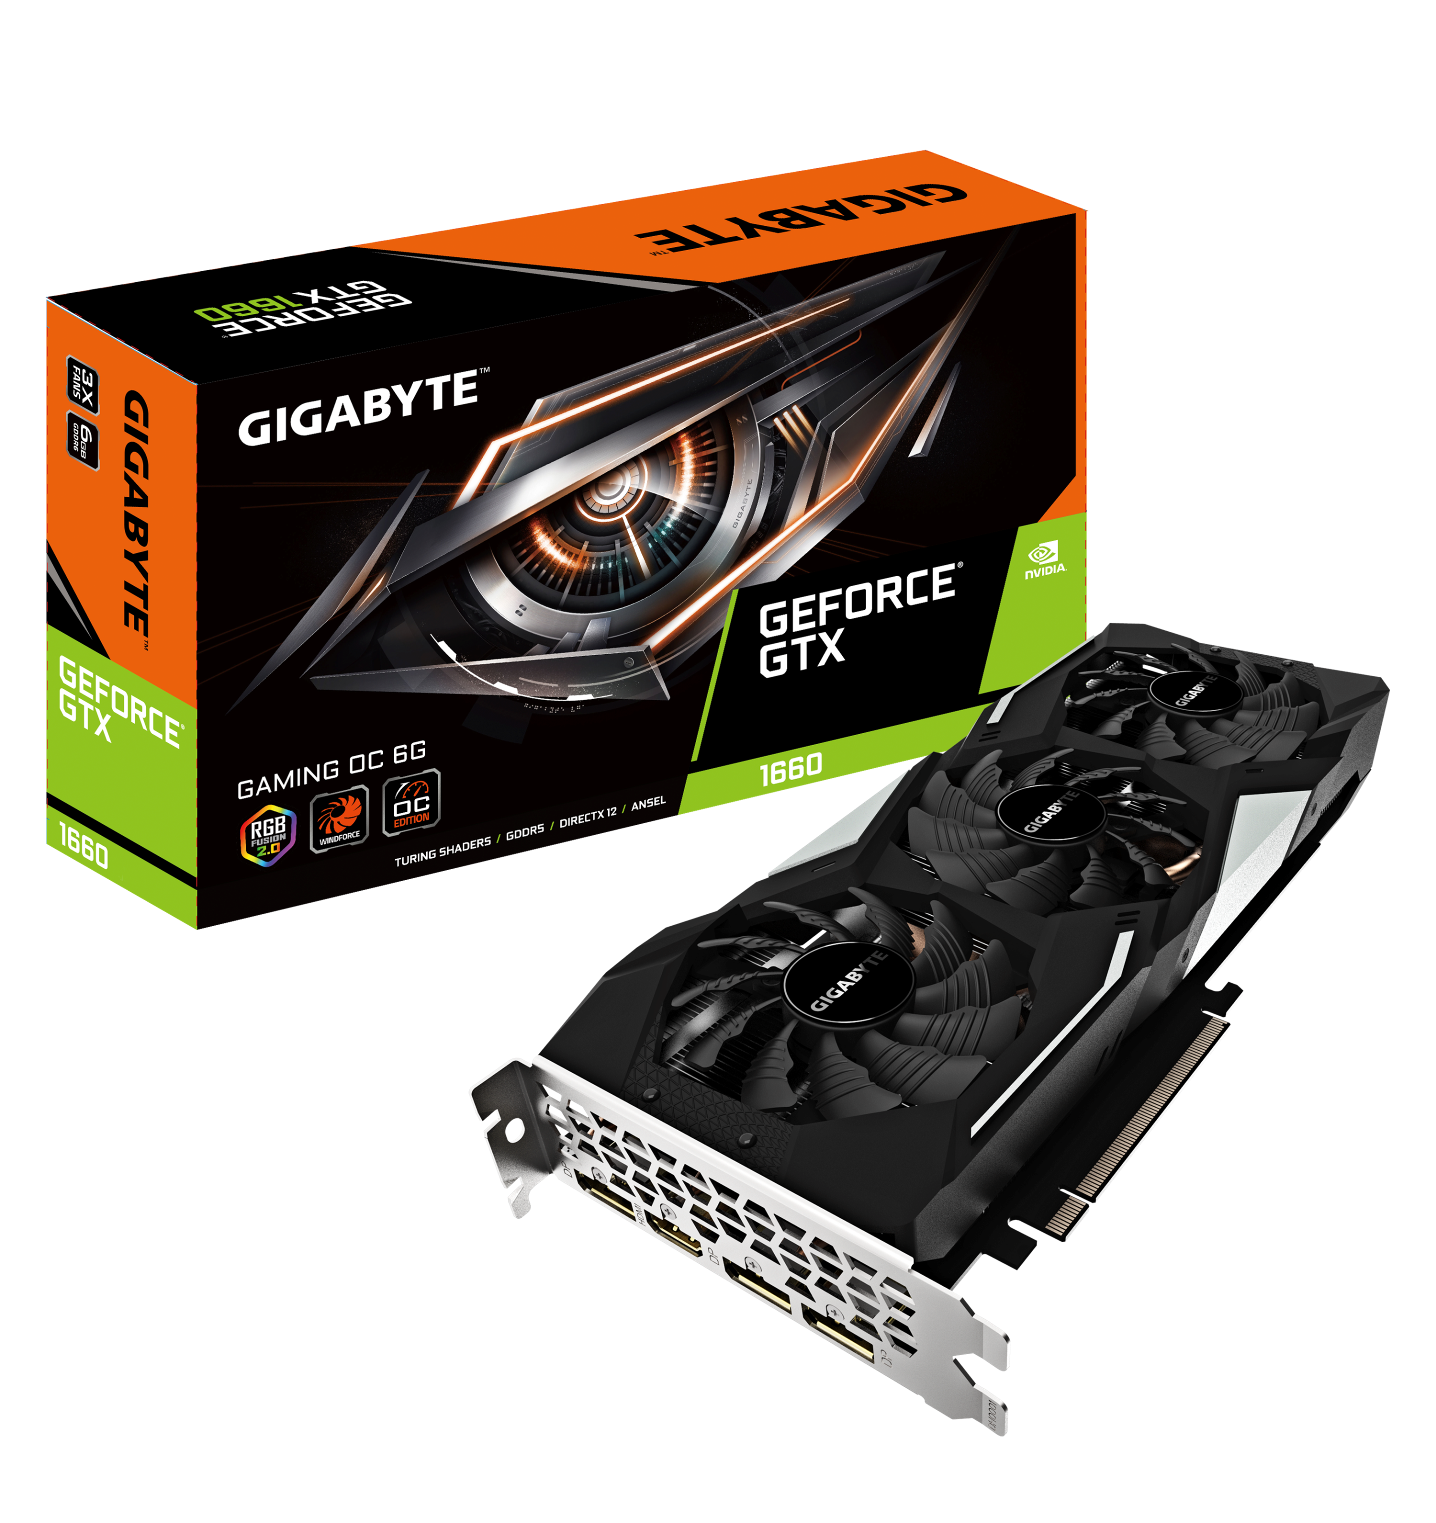 GIGABYTE Announces GeForce® GTX 1660 